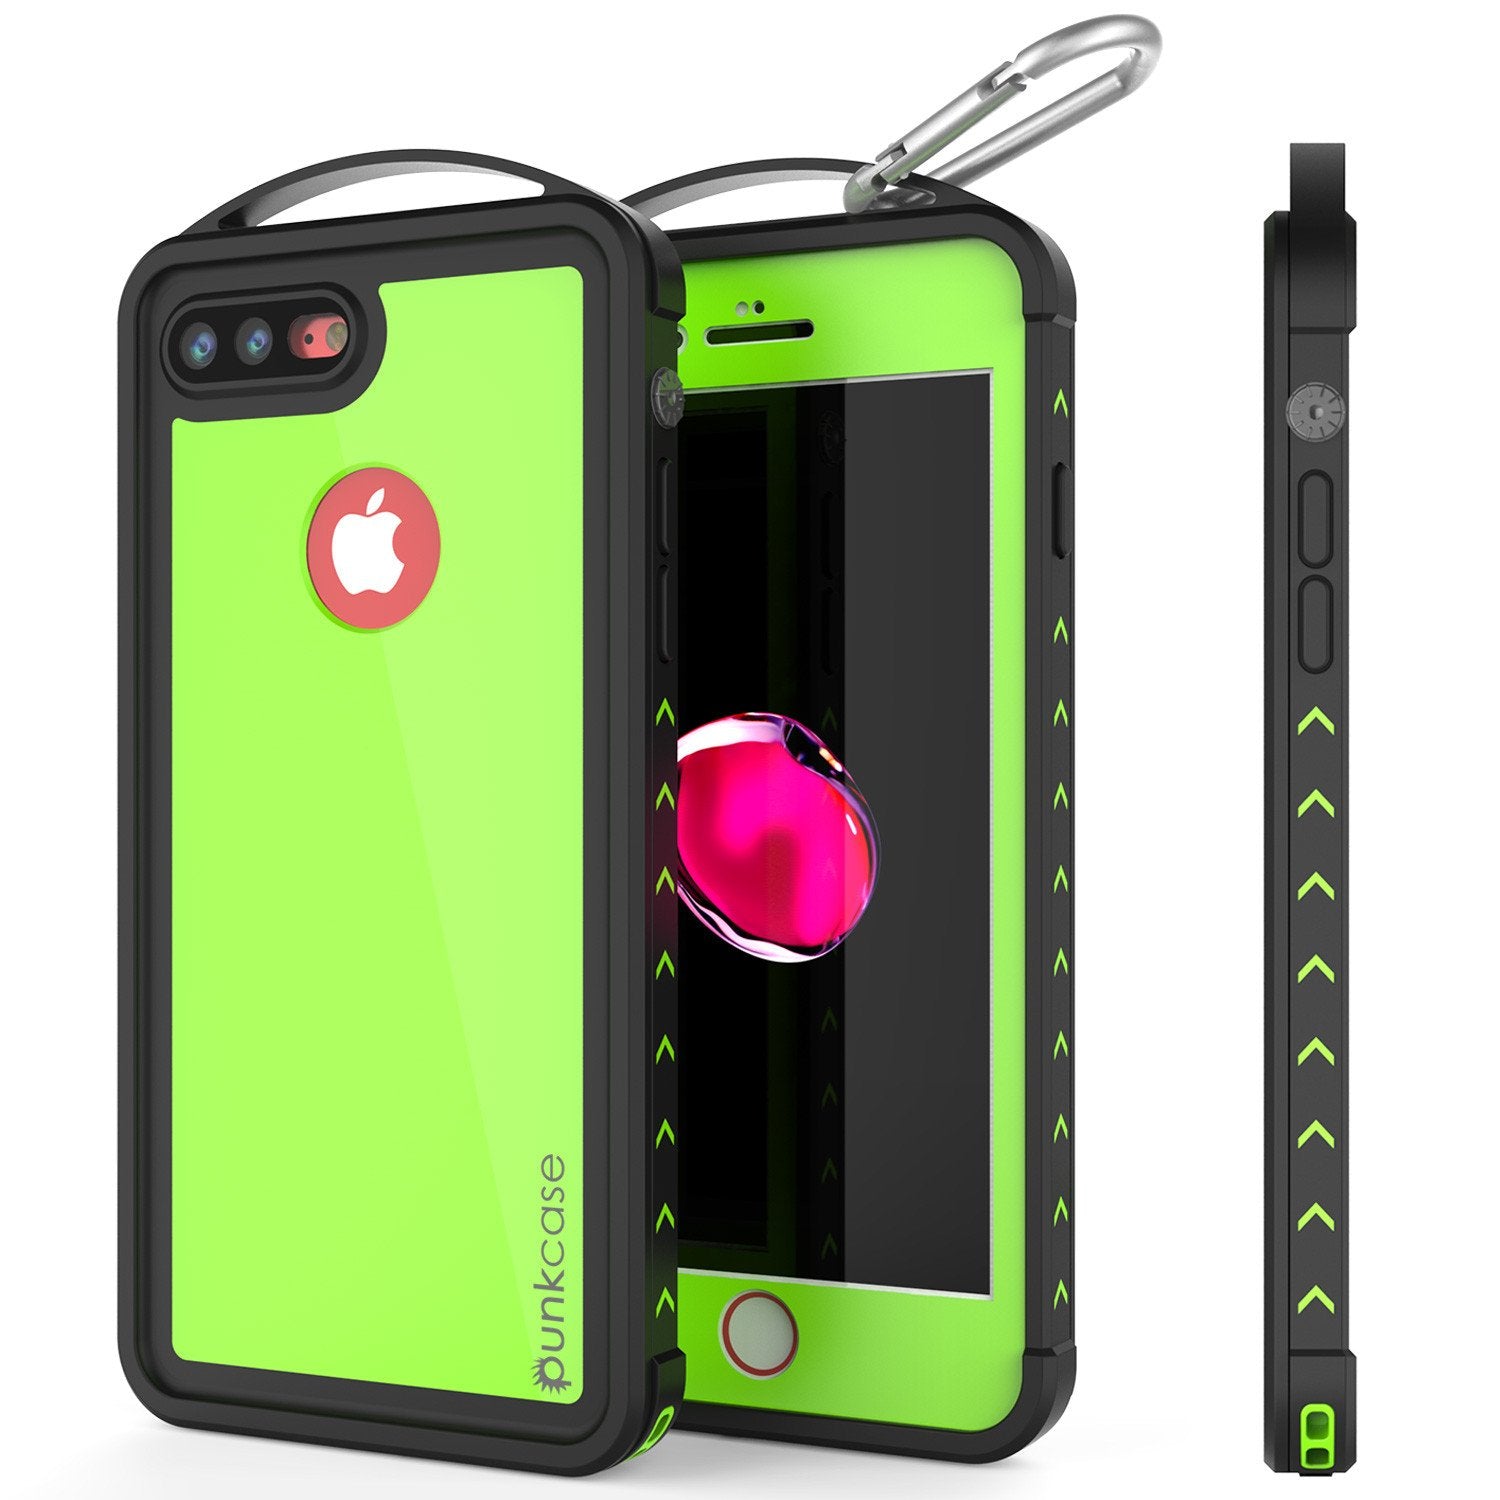 iPhone 7+ Plus Waterproof Case, Punkcase ALPINE Series, Light Green | Heavy Duty Armor Cover